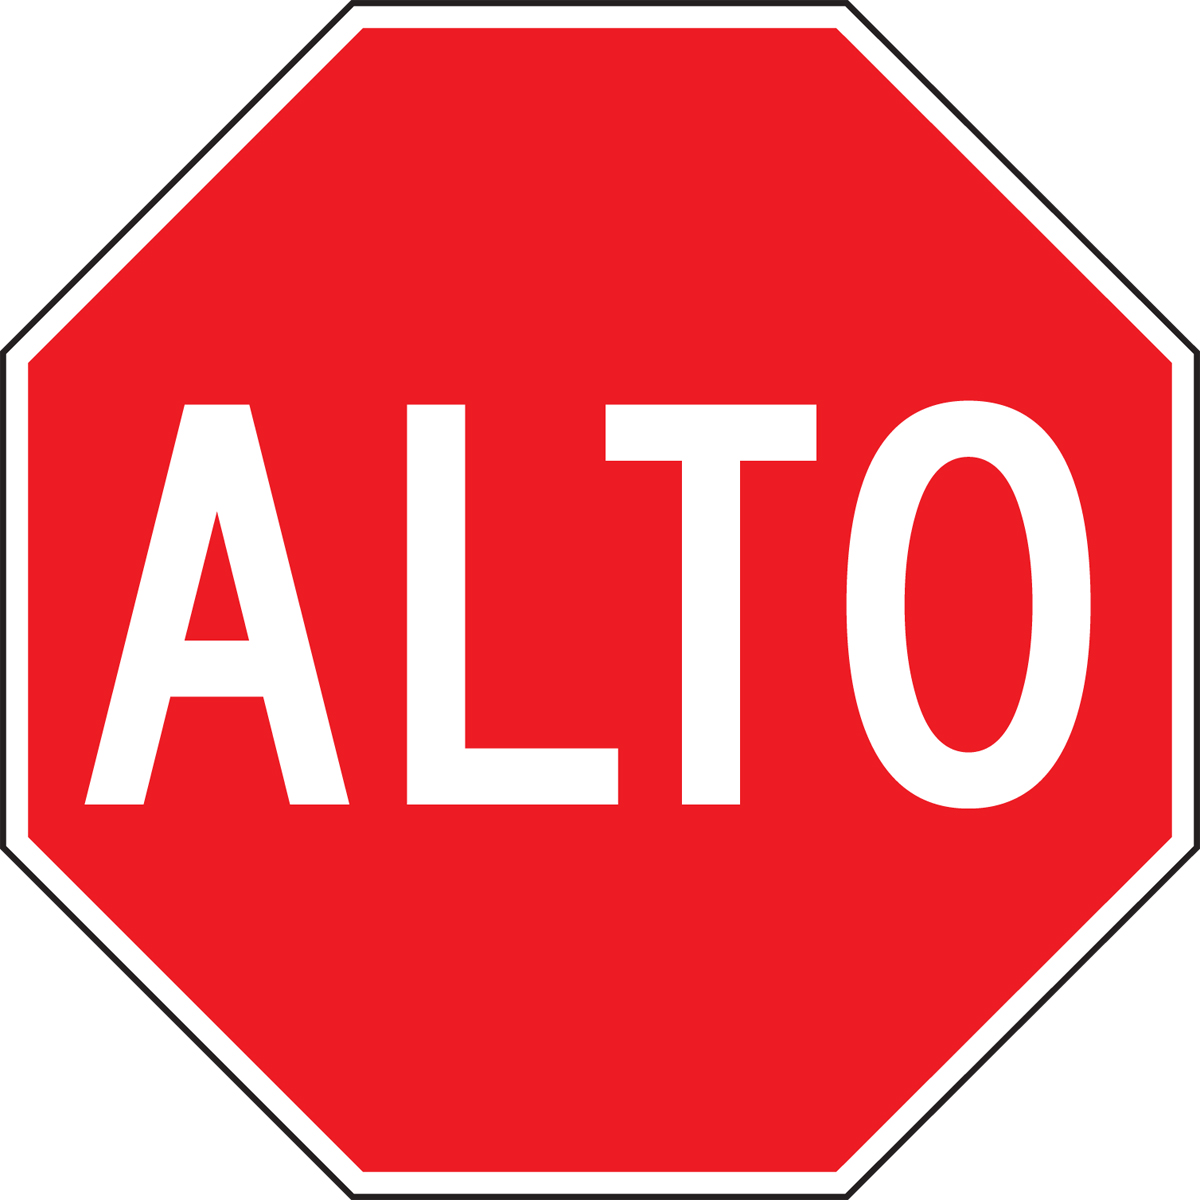 Spanish stop sign